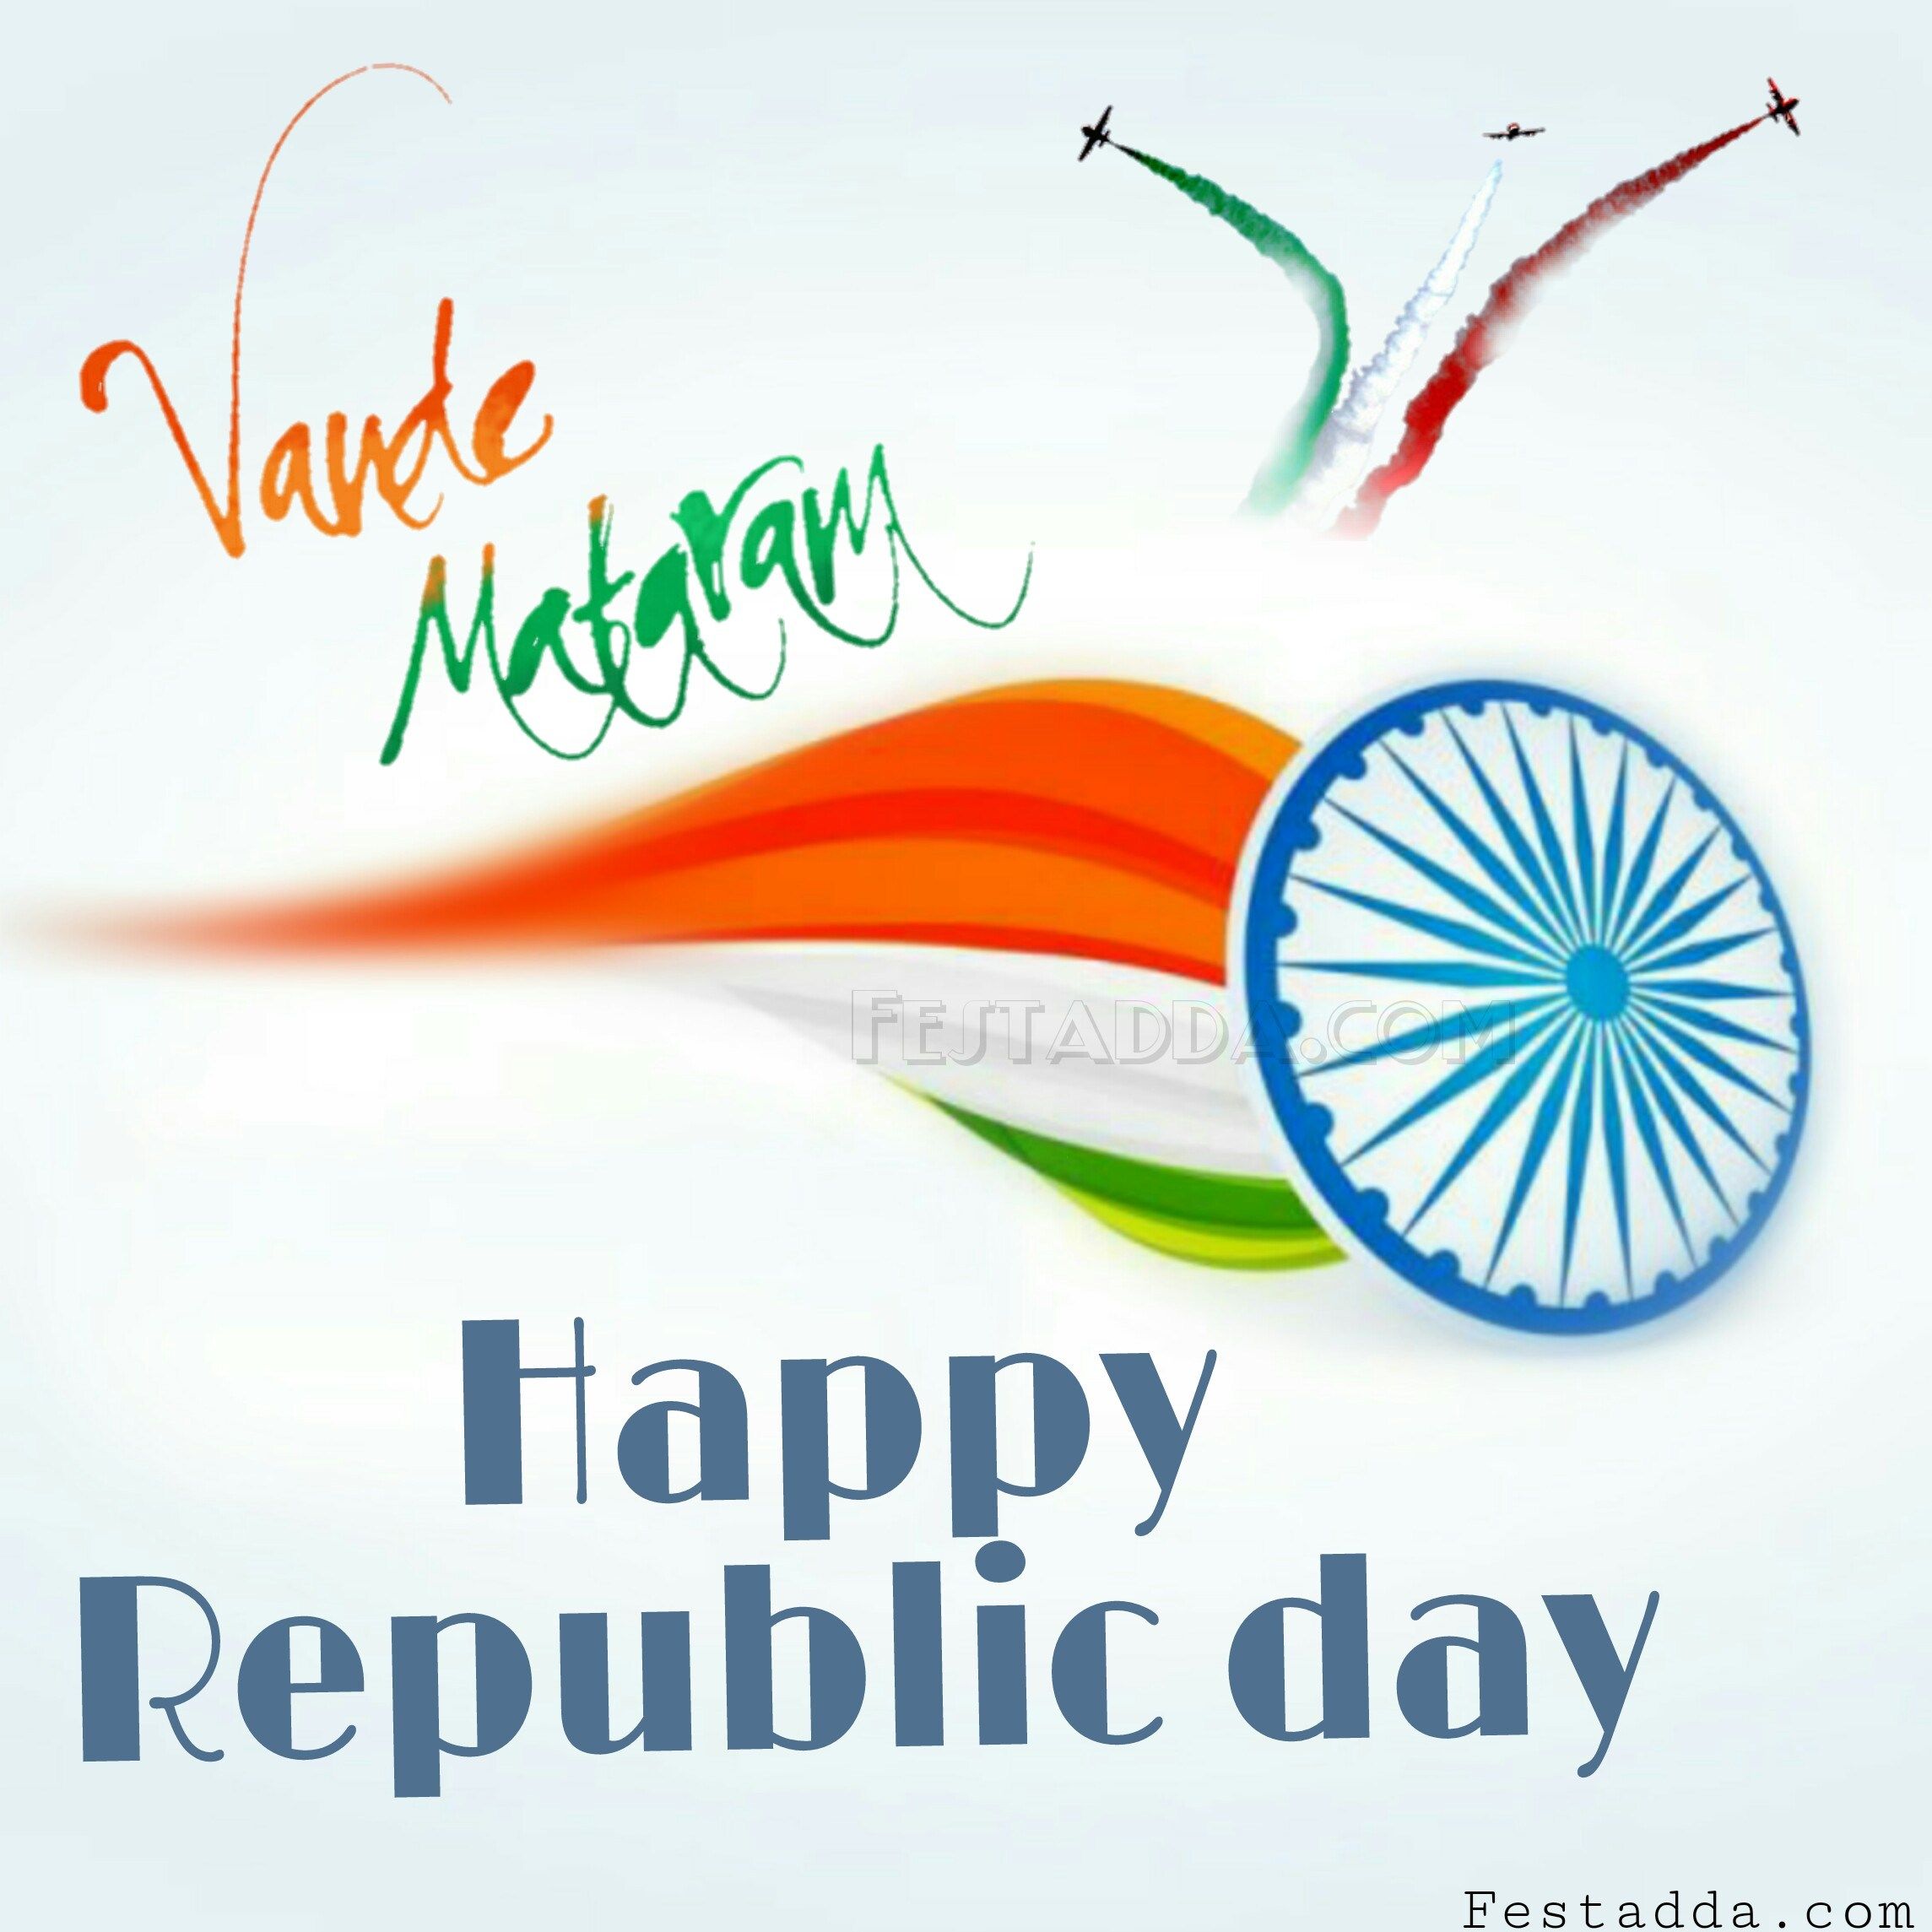 Happy Republic Day 2019 Photo. Quotes on republic day, Republic day, Republic